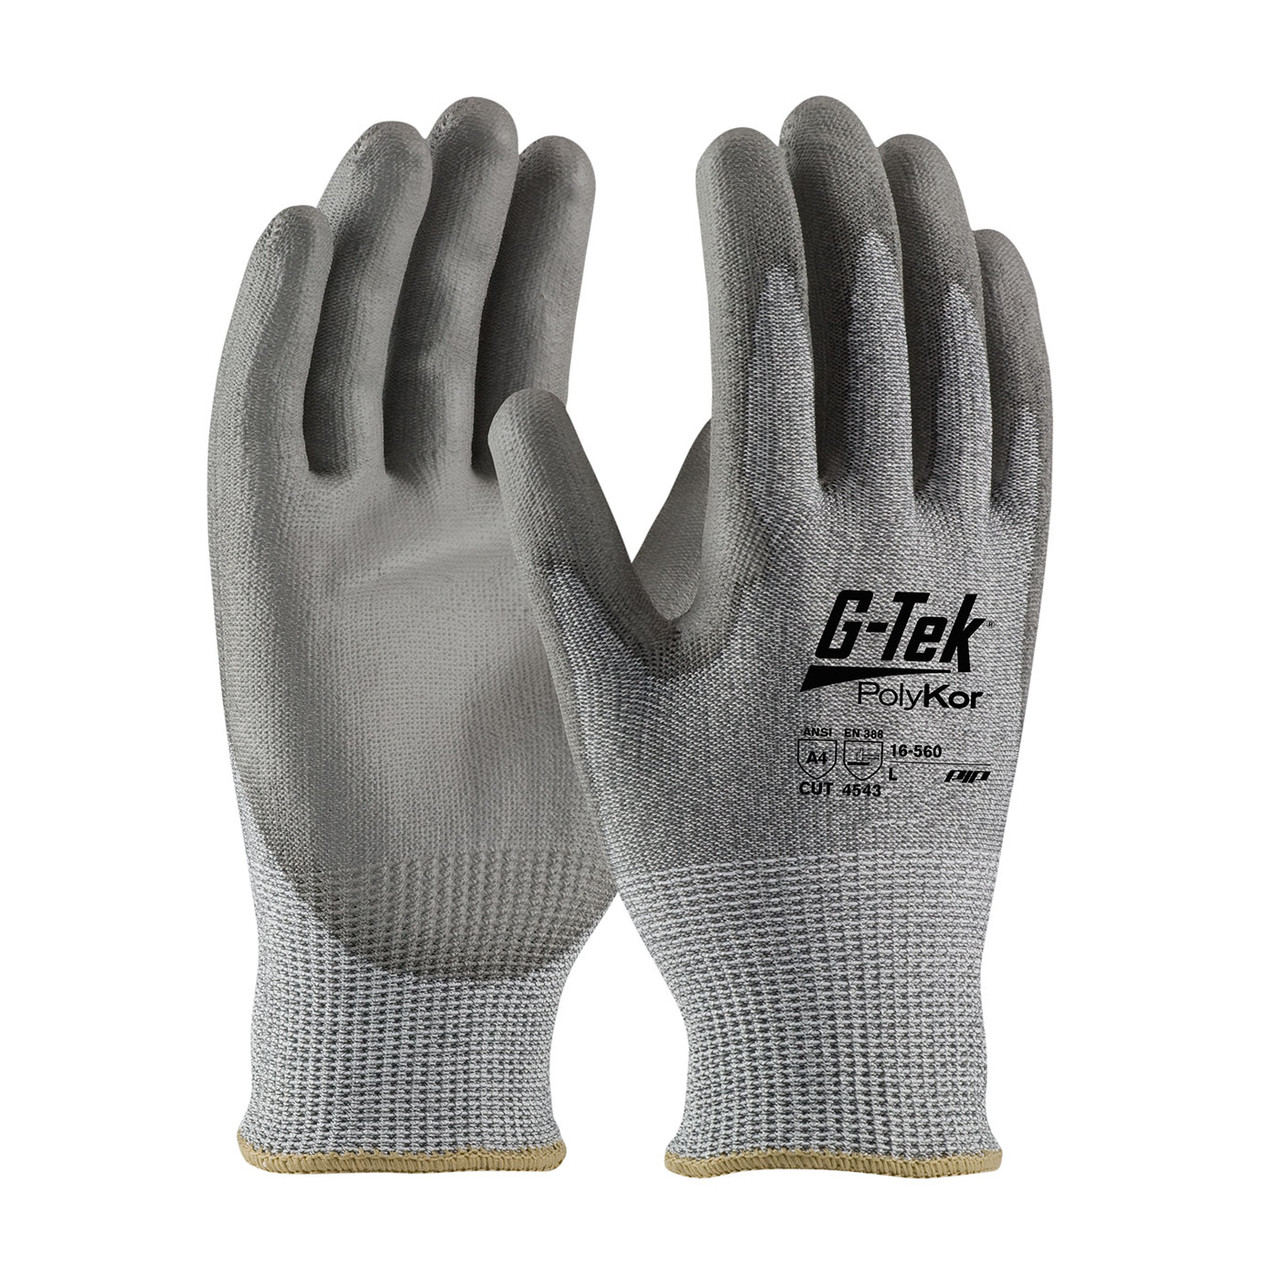 PIP A4 Cut Resistant Glove